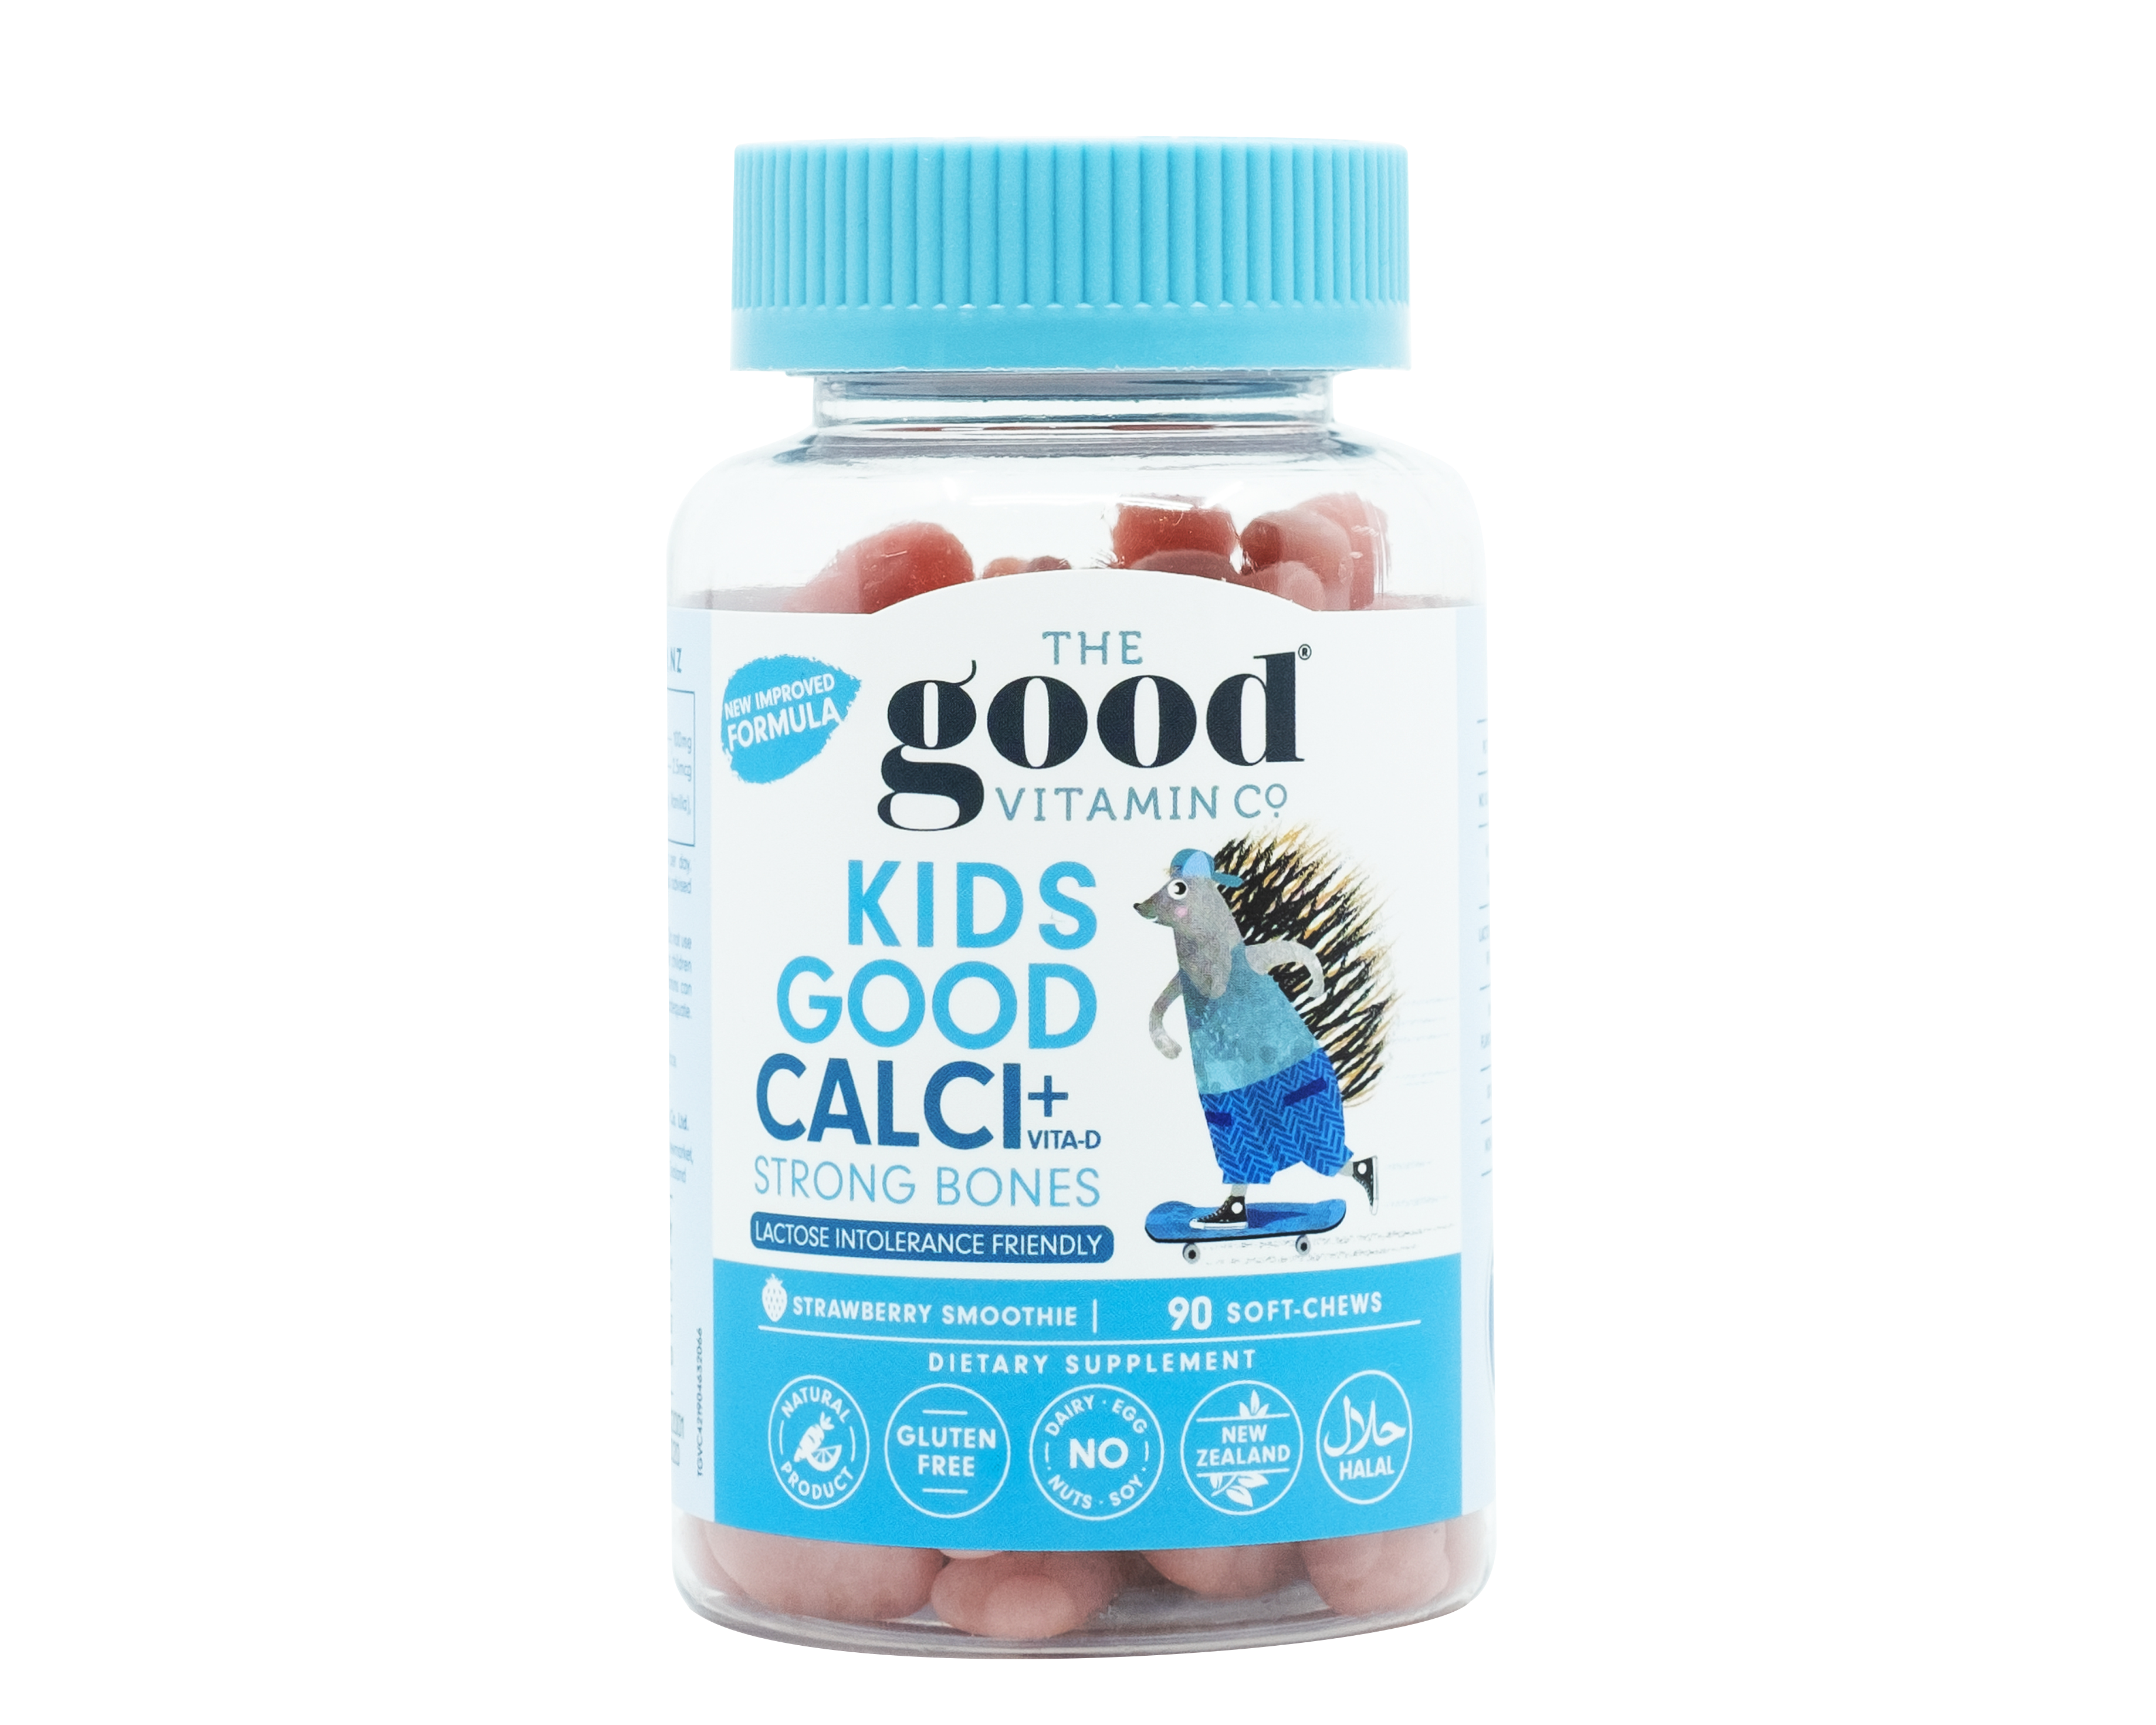 TheGoodVitaminCo Kids Good Calci+ & Vita-D 90 soft-chews - 365 Health Limited